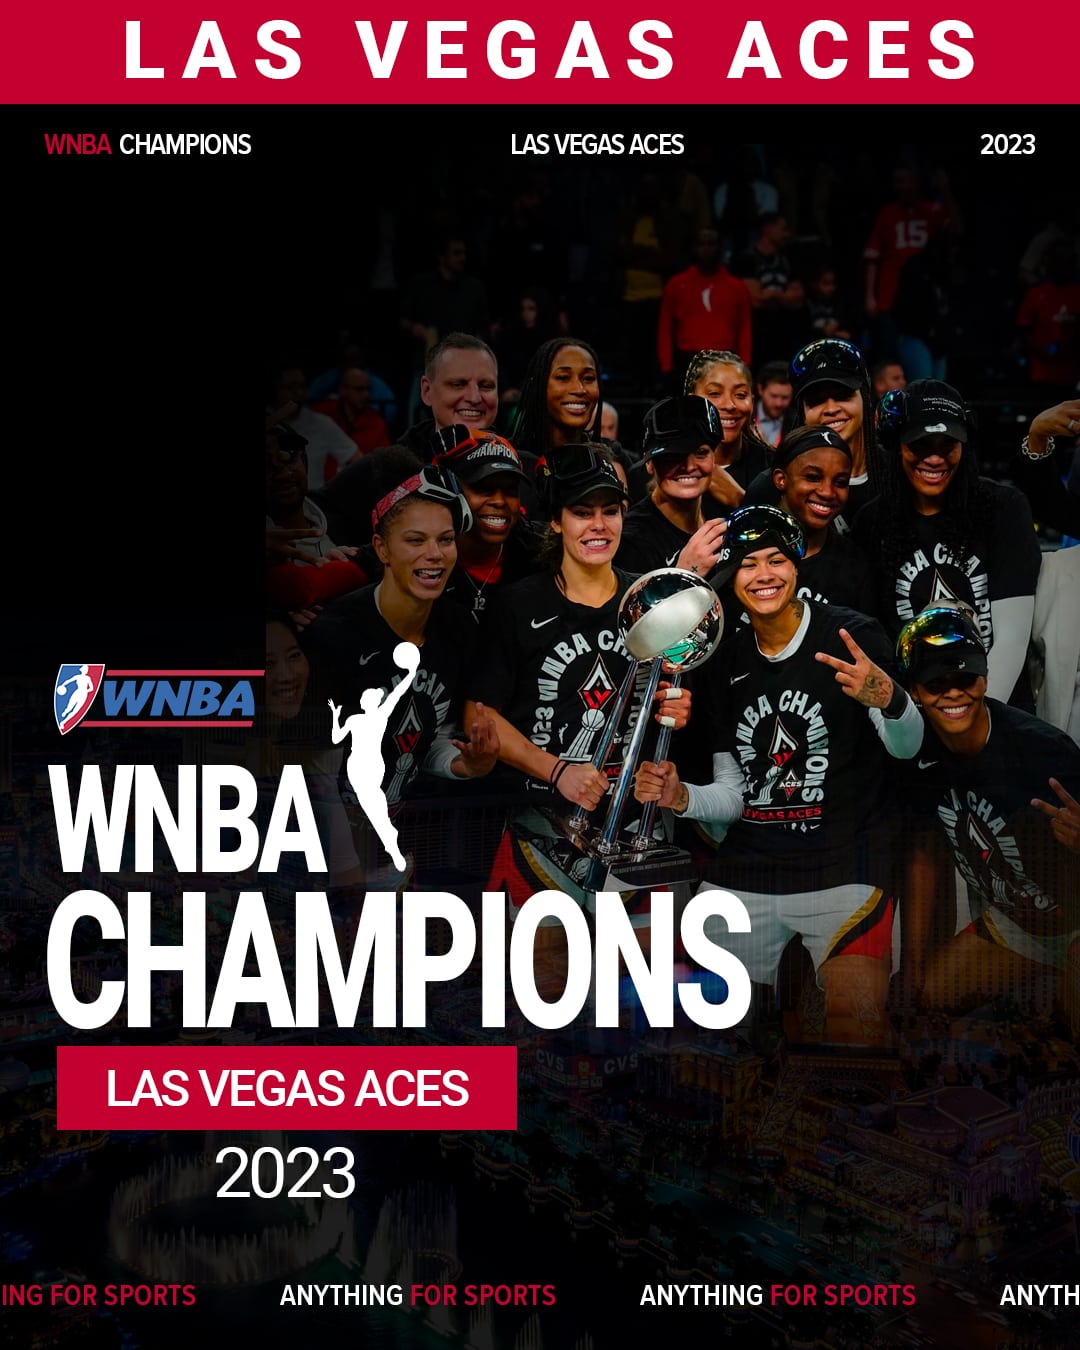 WNBA Championship Pro Team Awards | Anything for Sports | Las Vegas Sports